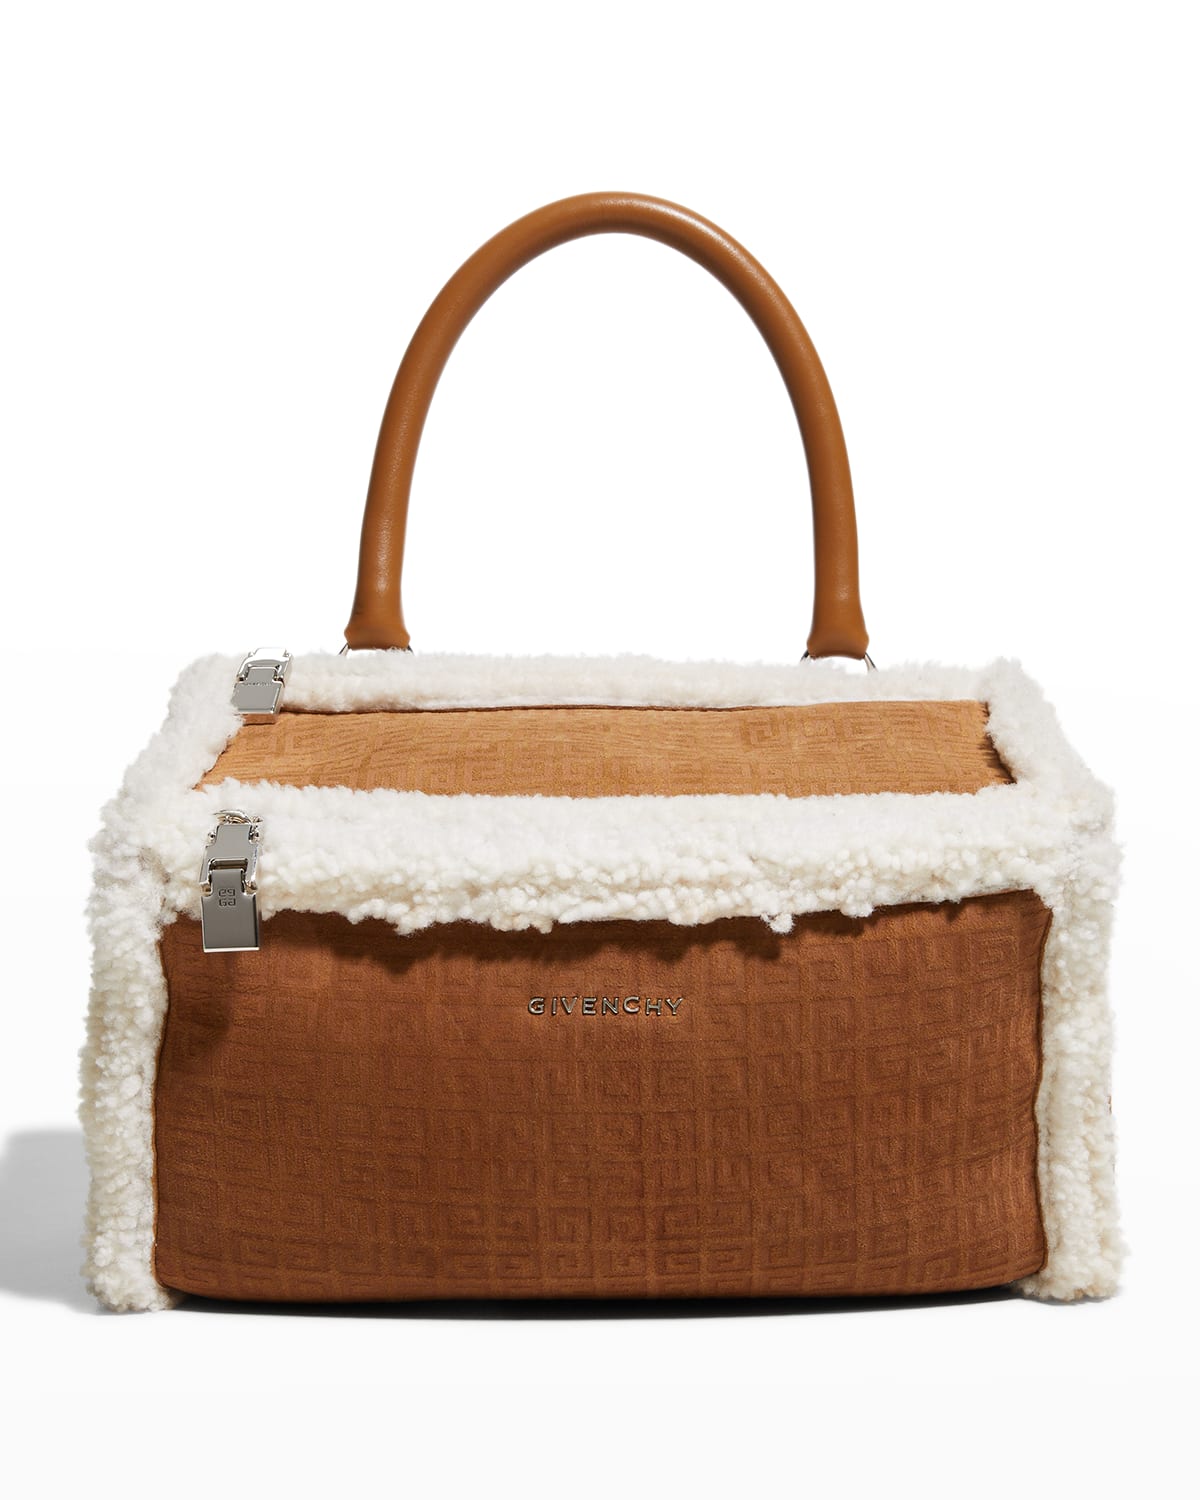 Givenchy Small Pandora Top-Handle Bag in Suede and Lamb Shearling